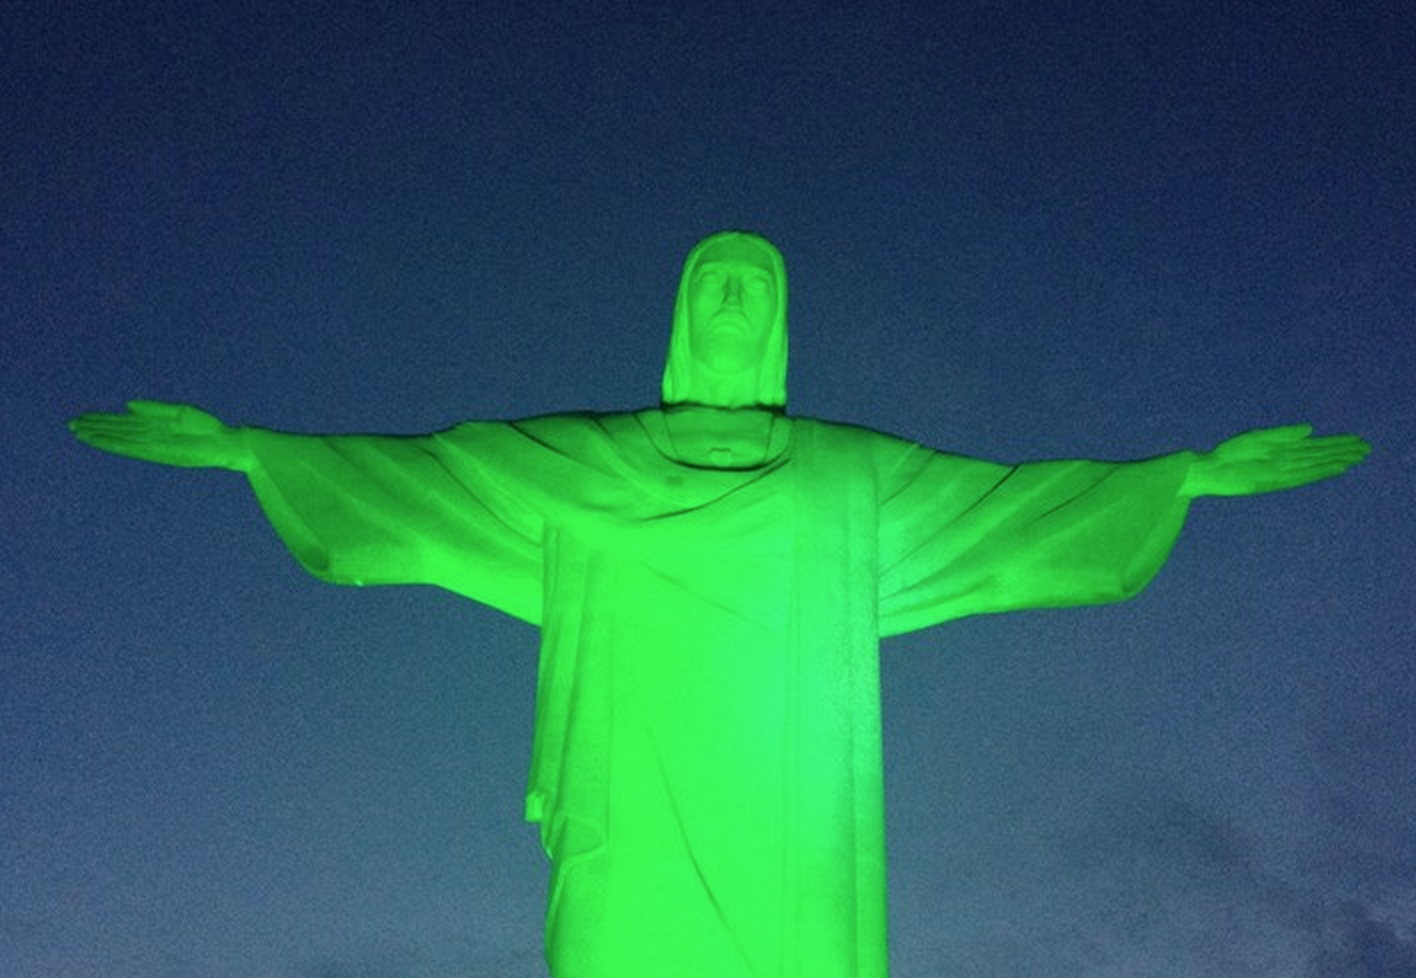 Celebrating St. Patrick’s Day 2015  in Rio de Janeiro